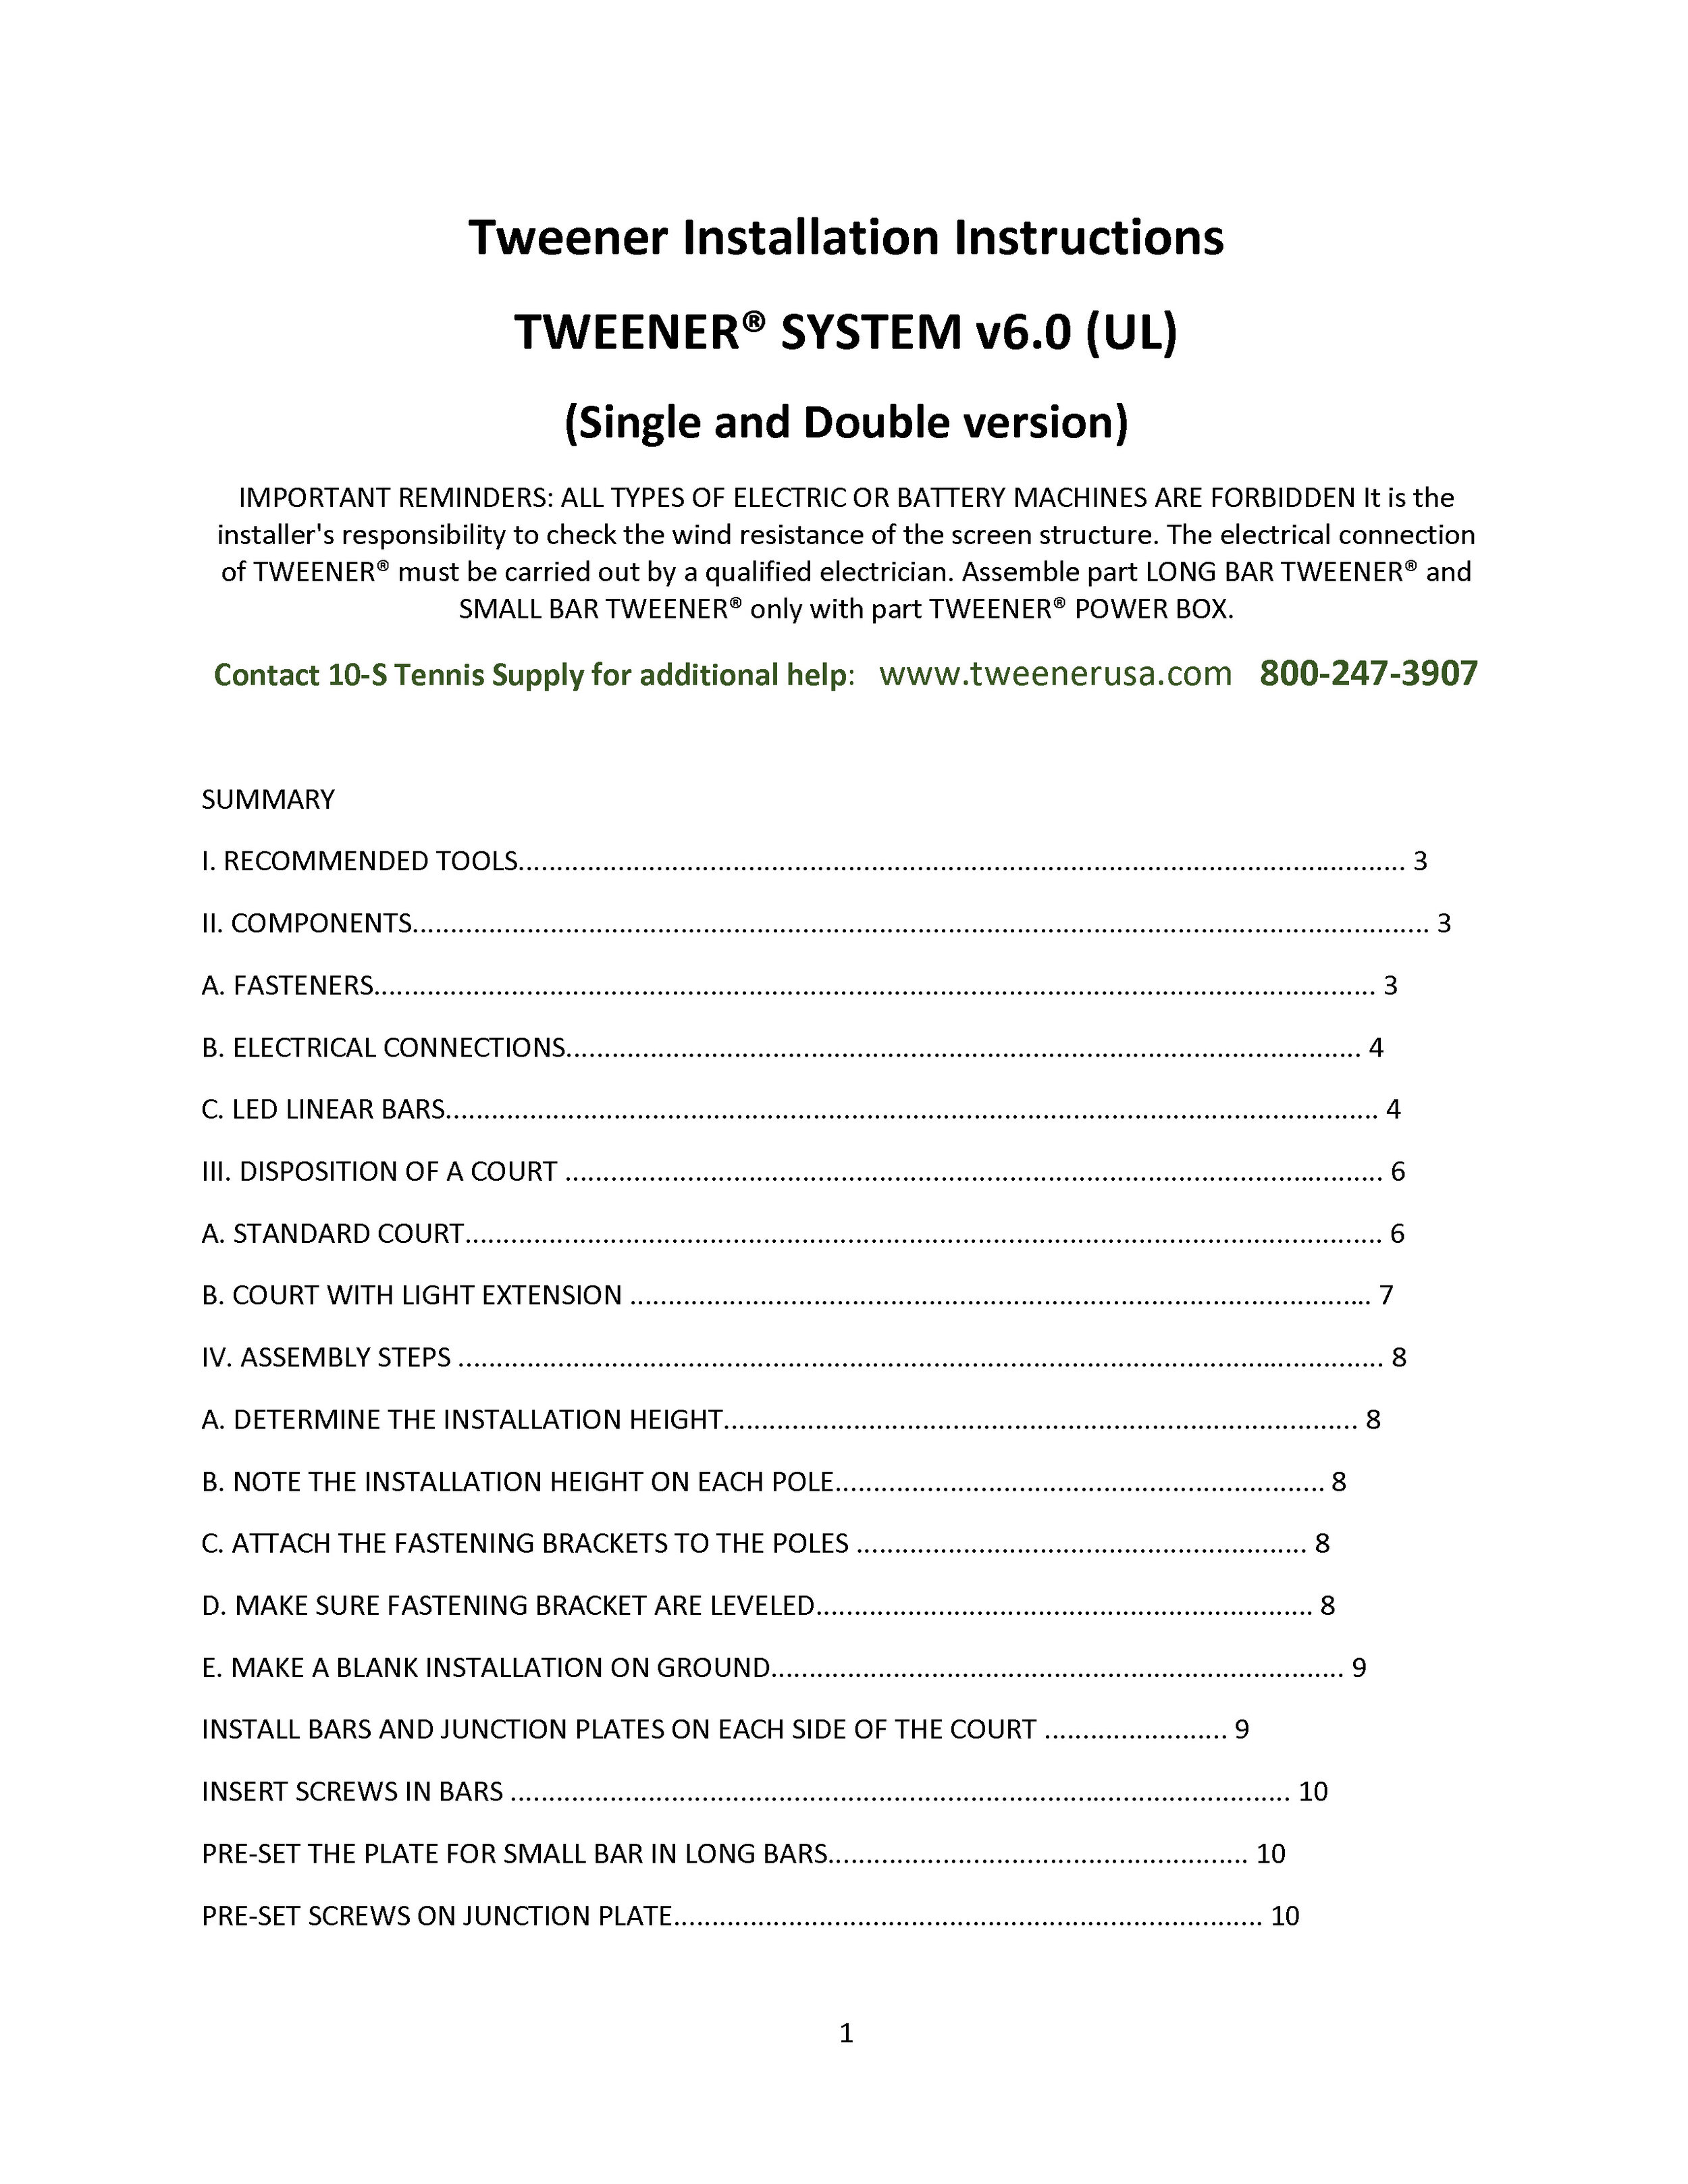 Tweener USA Installation Guide - Oct 15 2021 Print_Page_01.jpg